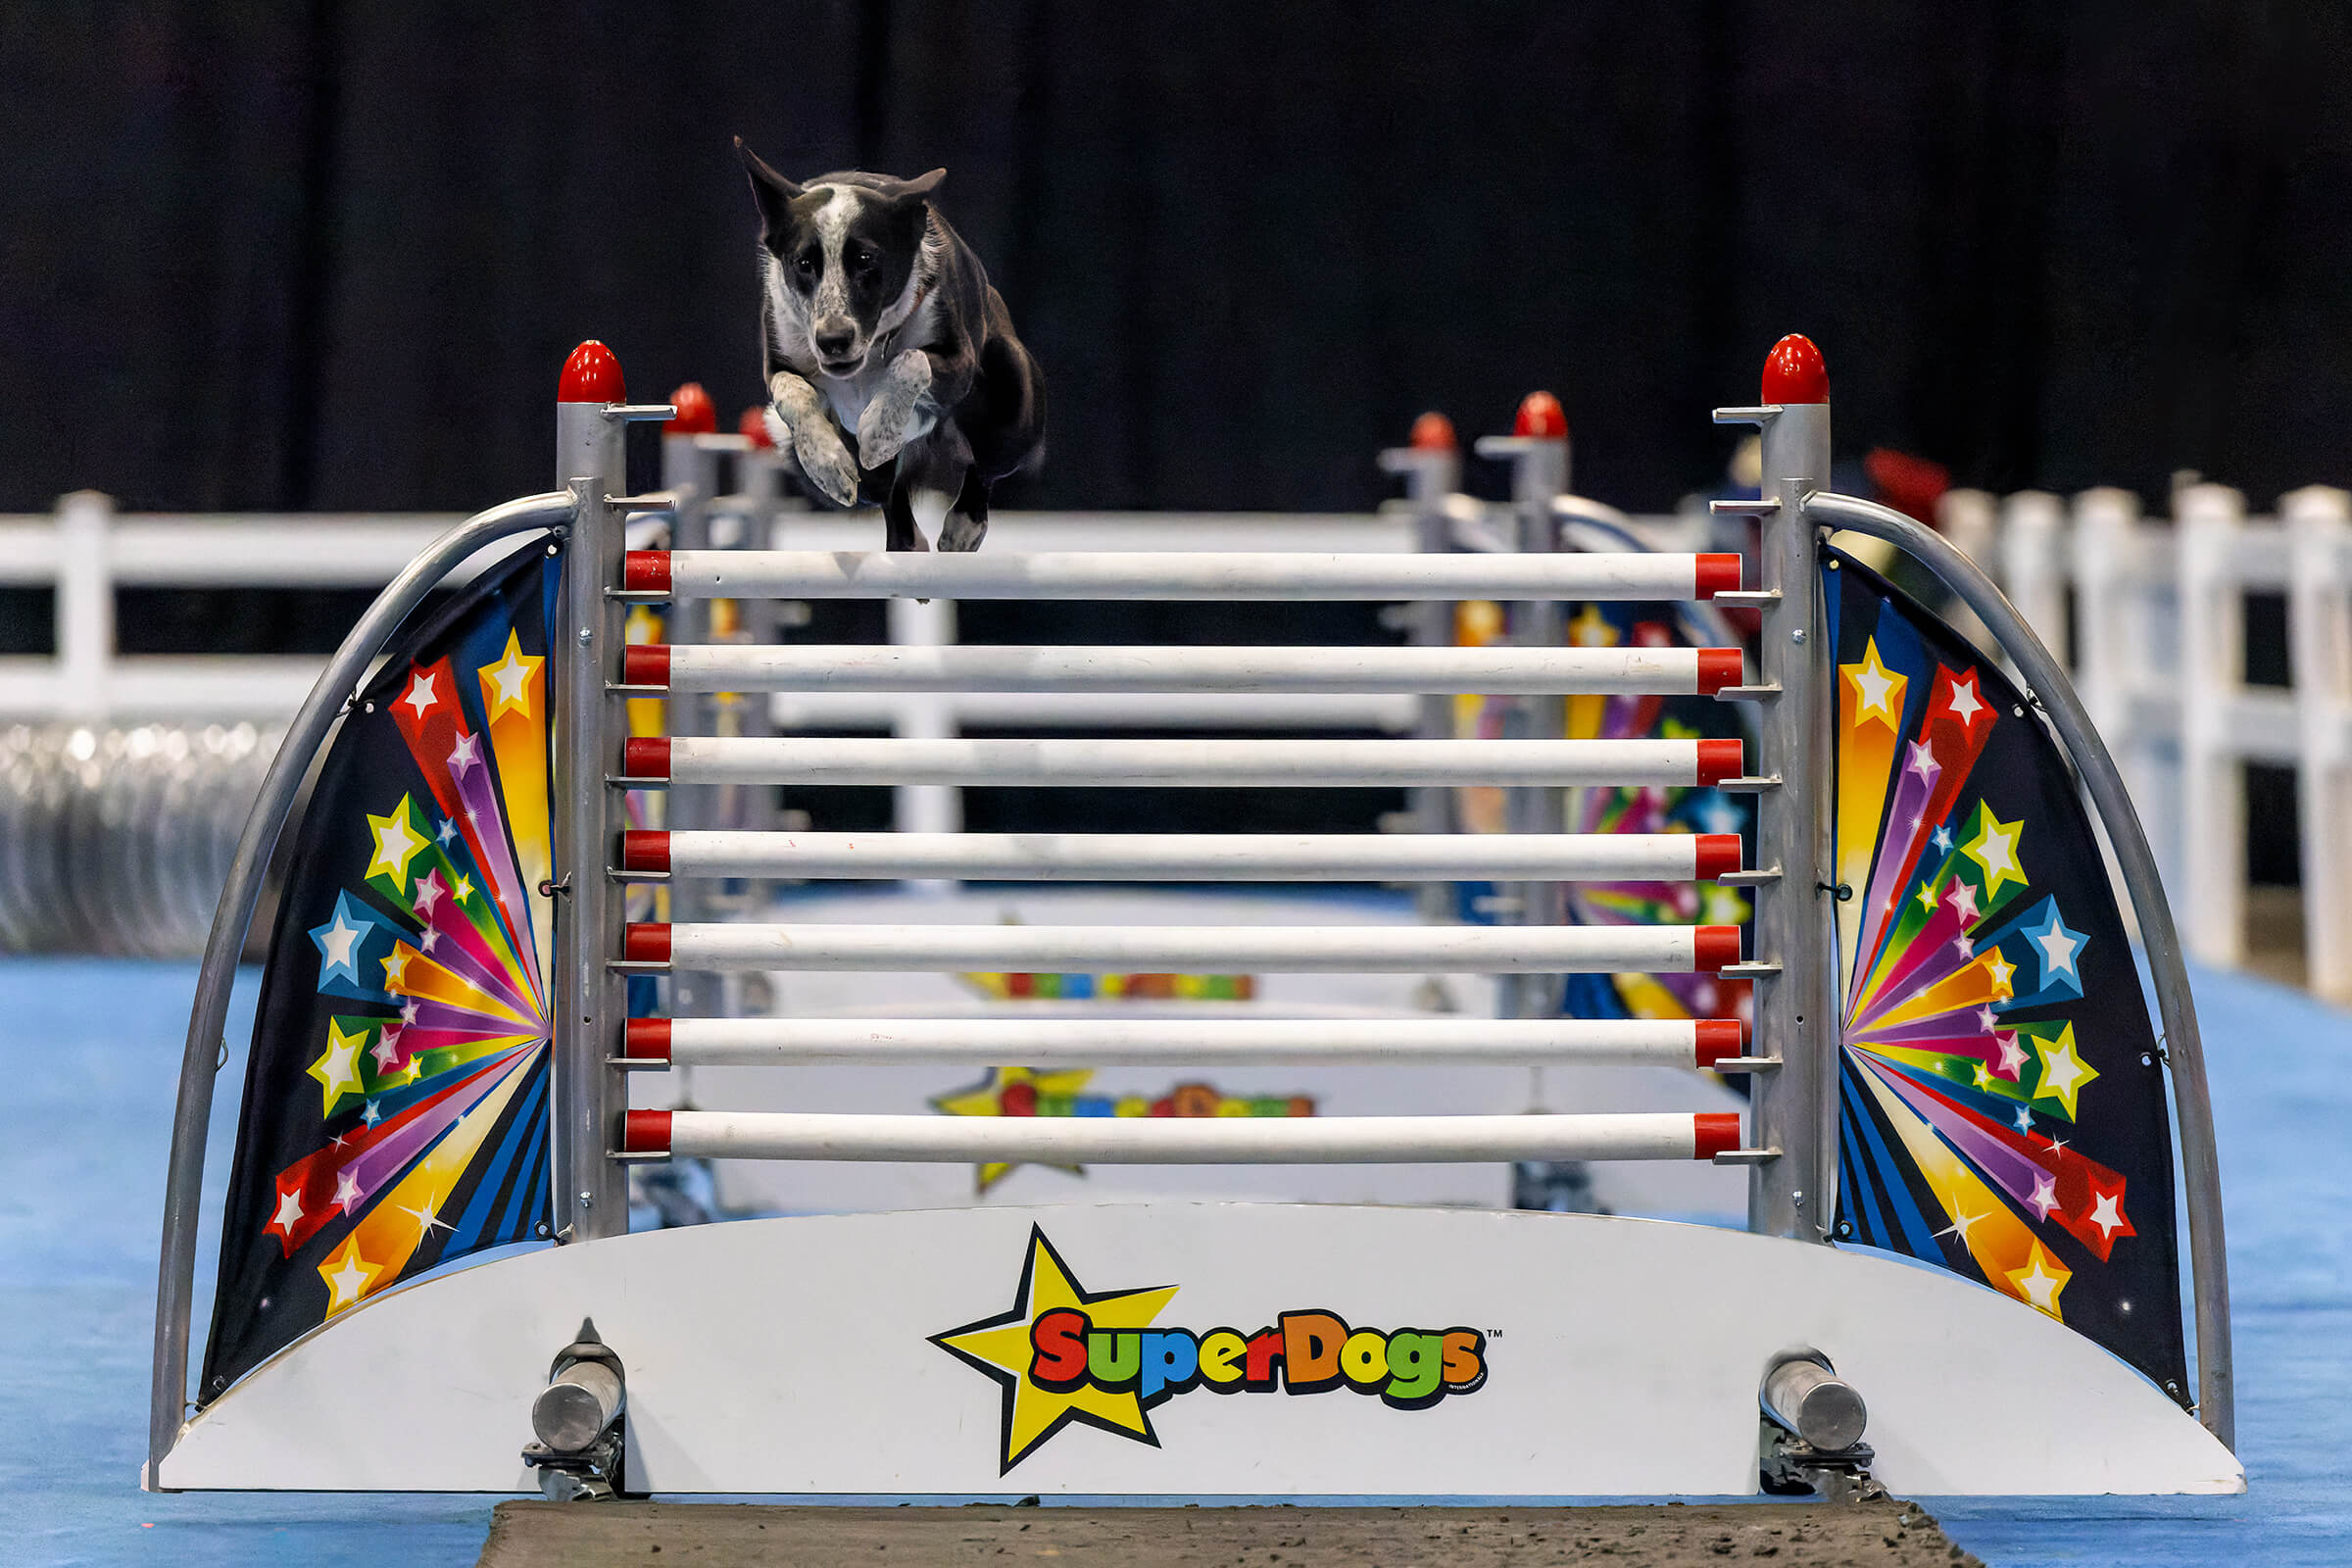 SuperDogs jumping rails